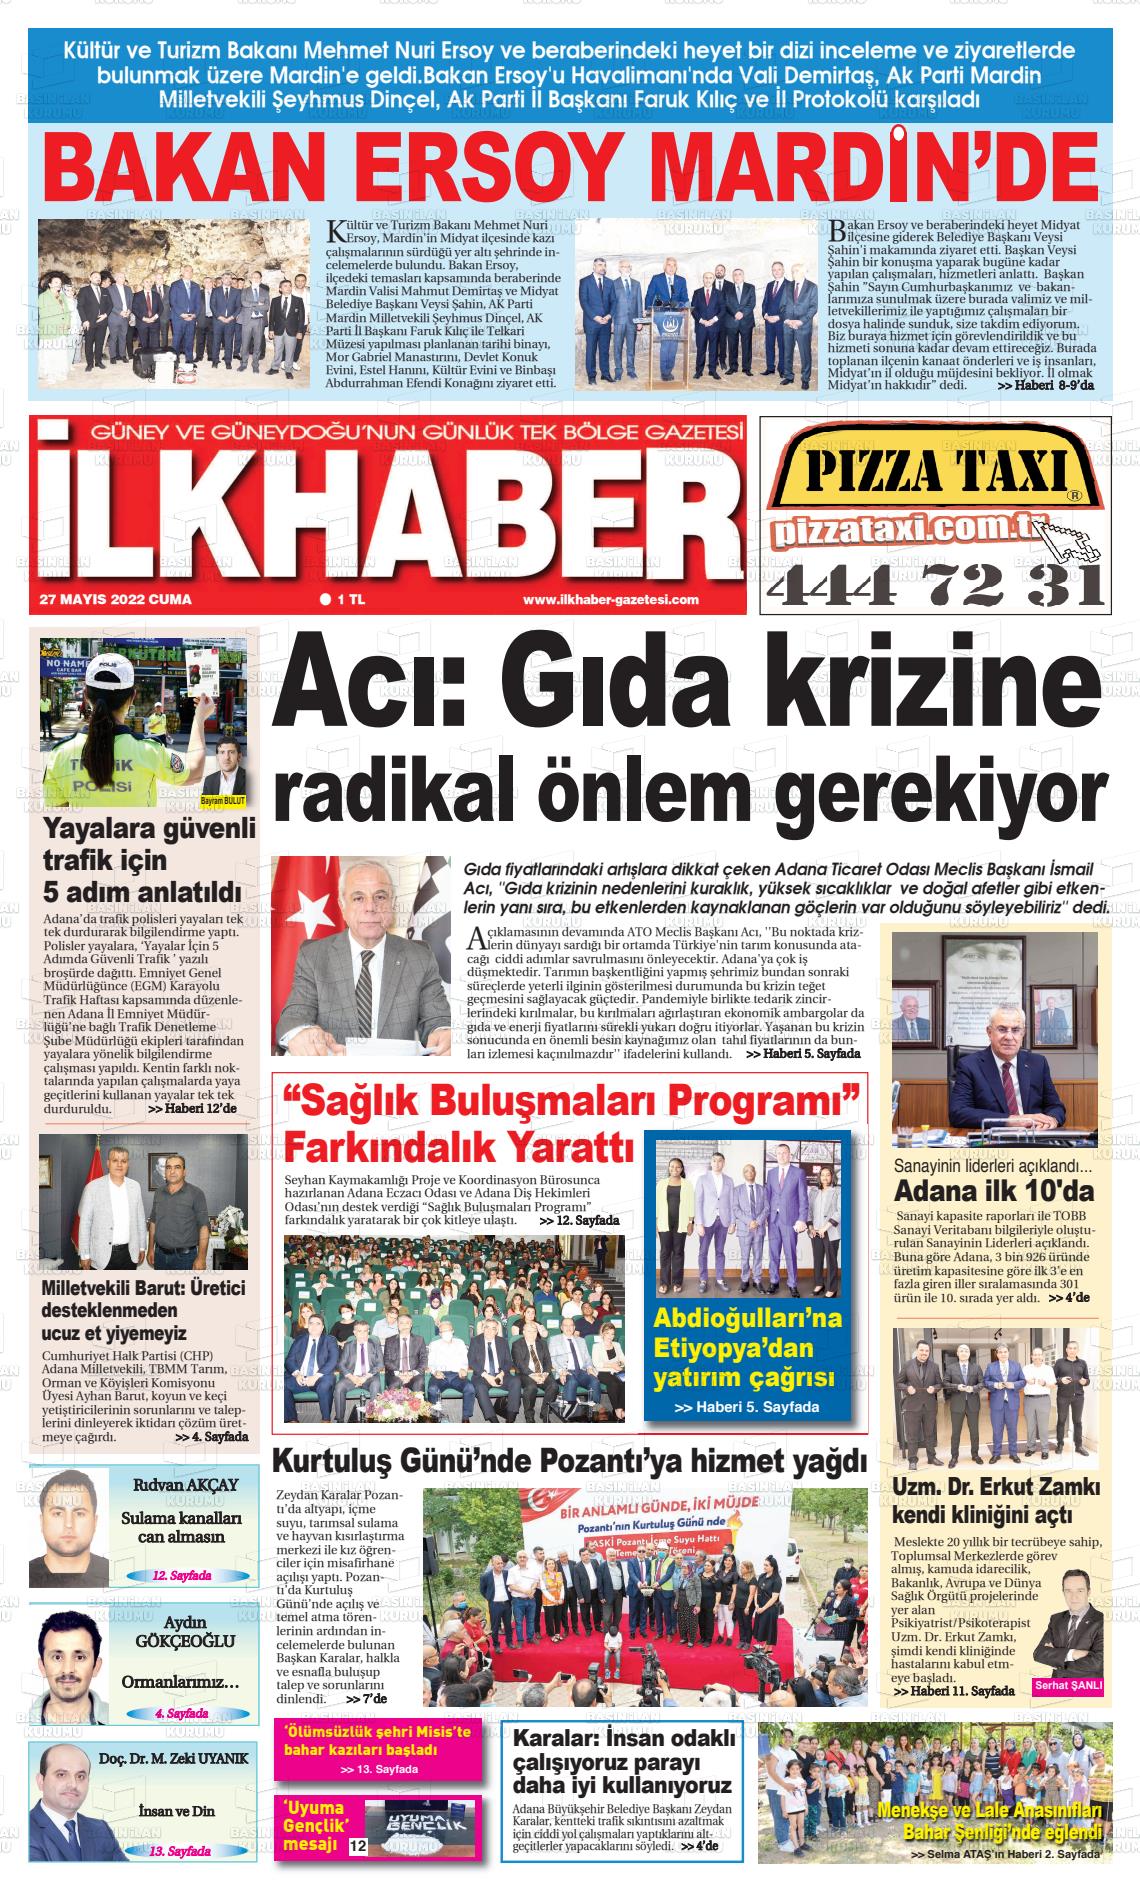 27 Mayıs 2022 İlk Haber Gazete Manşeti